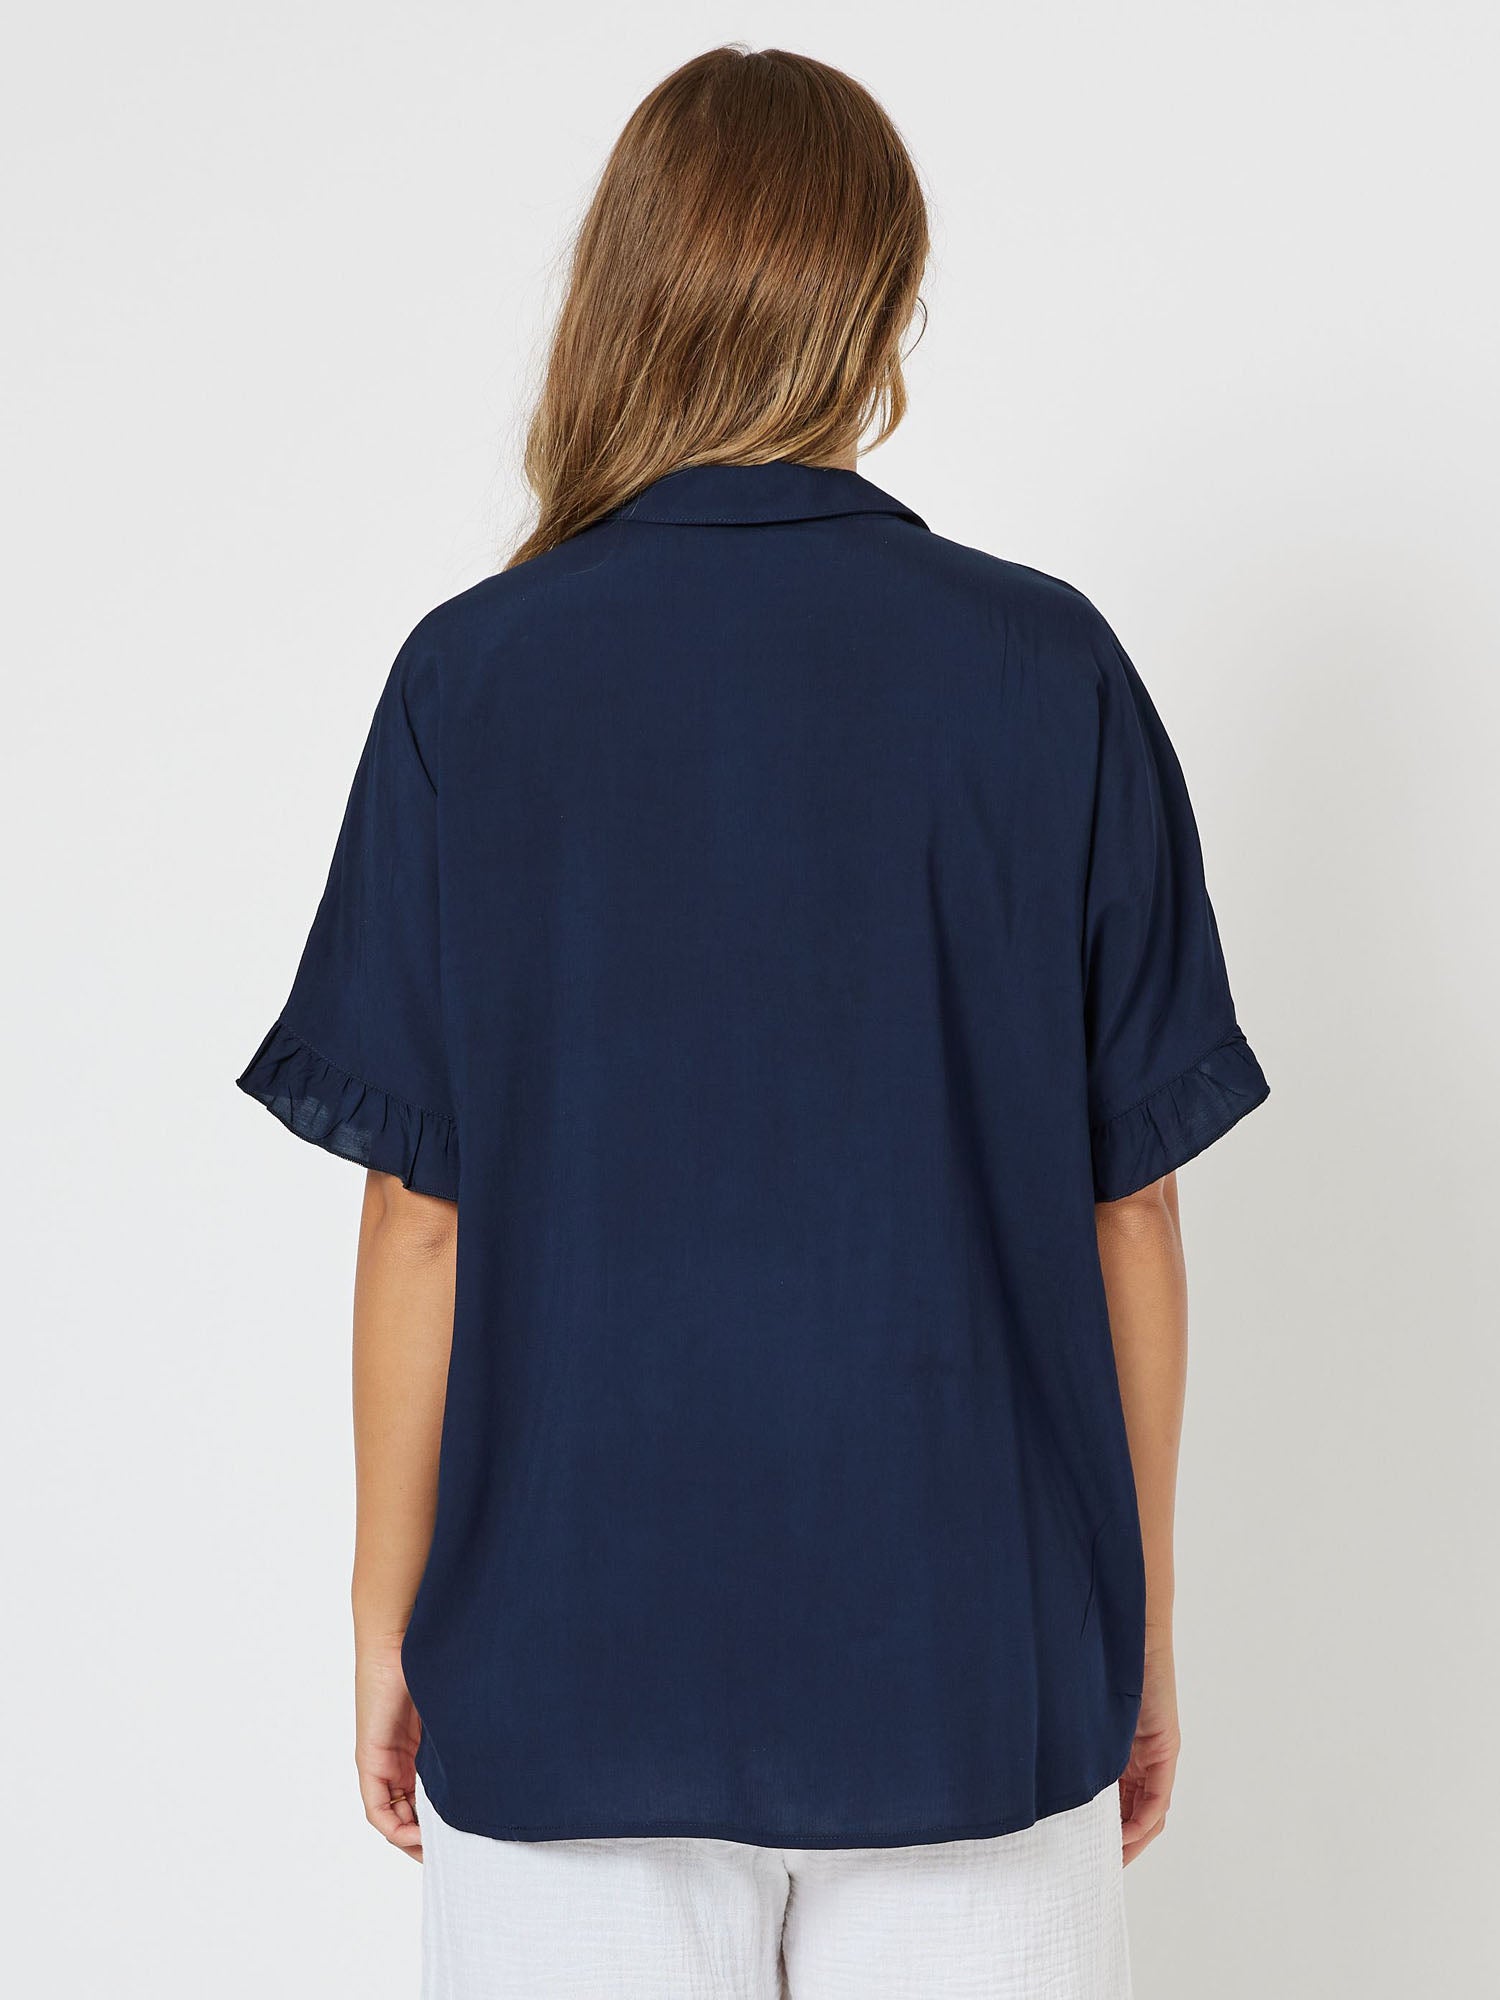 Kylie Short Sleeve Frill Trim Shirt - Navy